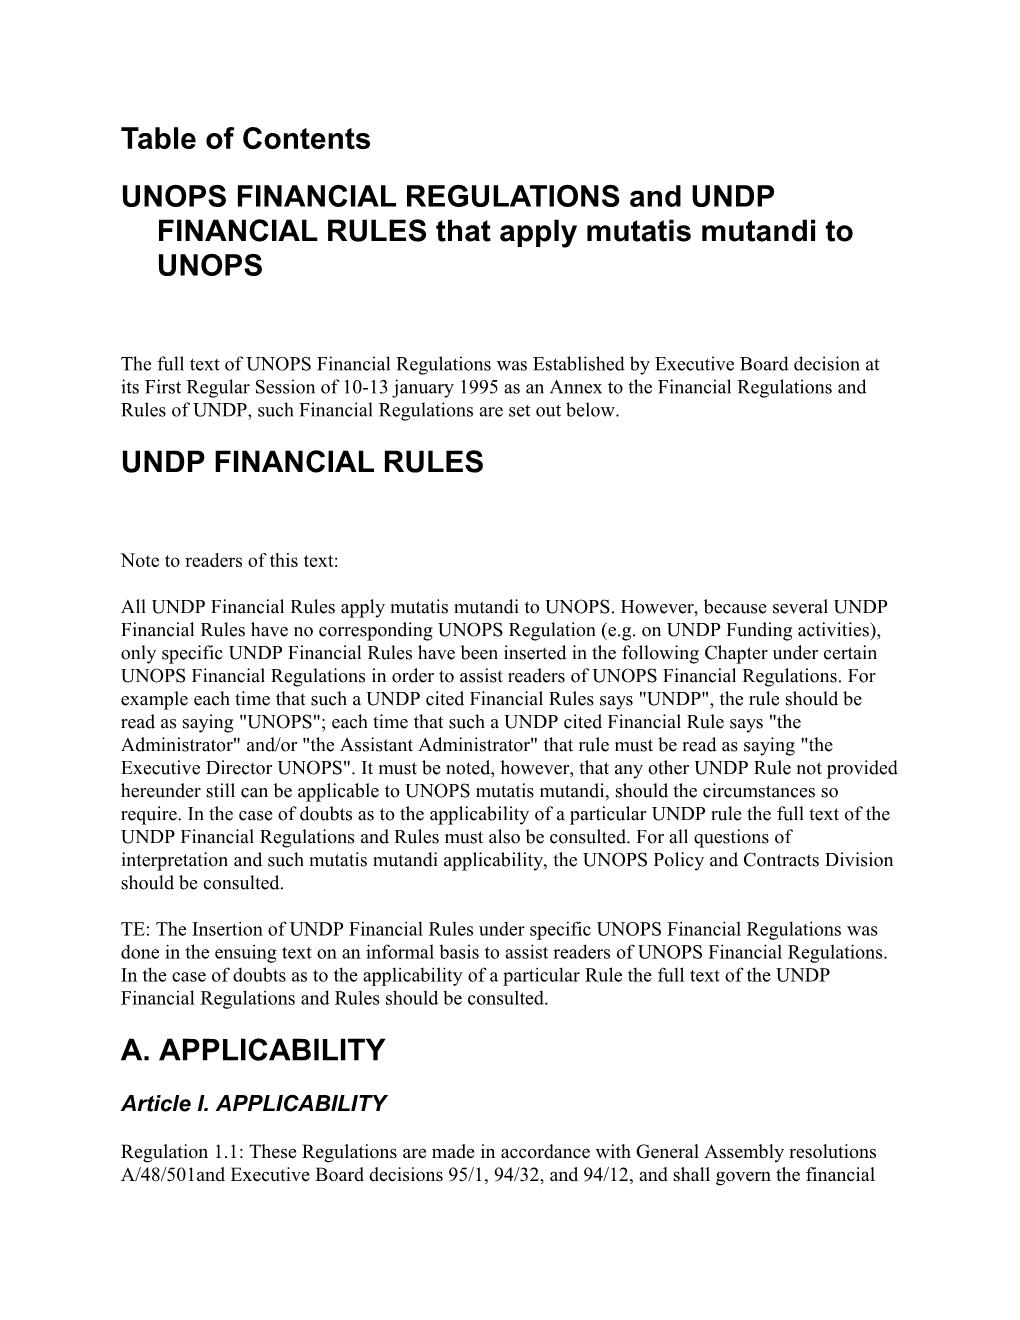 UNOPS FINANCIAL REGULATIONS and UNDP FINANCIAL RULES That Apply Mutatis Mutandi to UNOPS